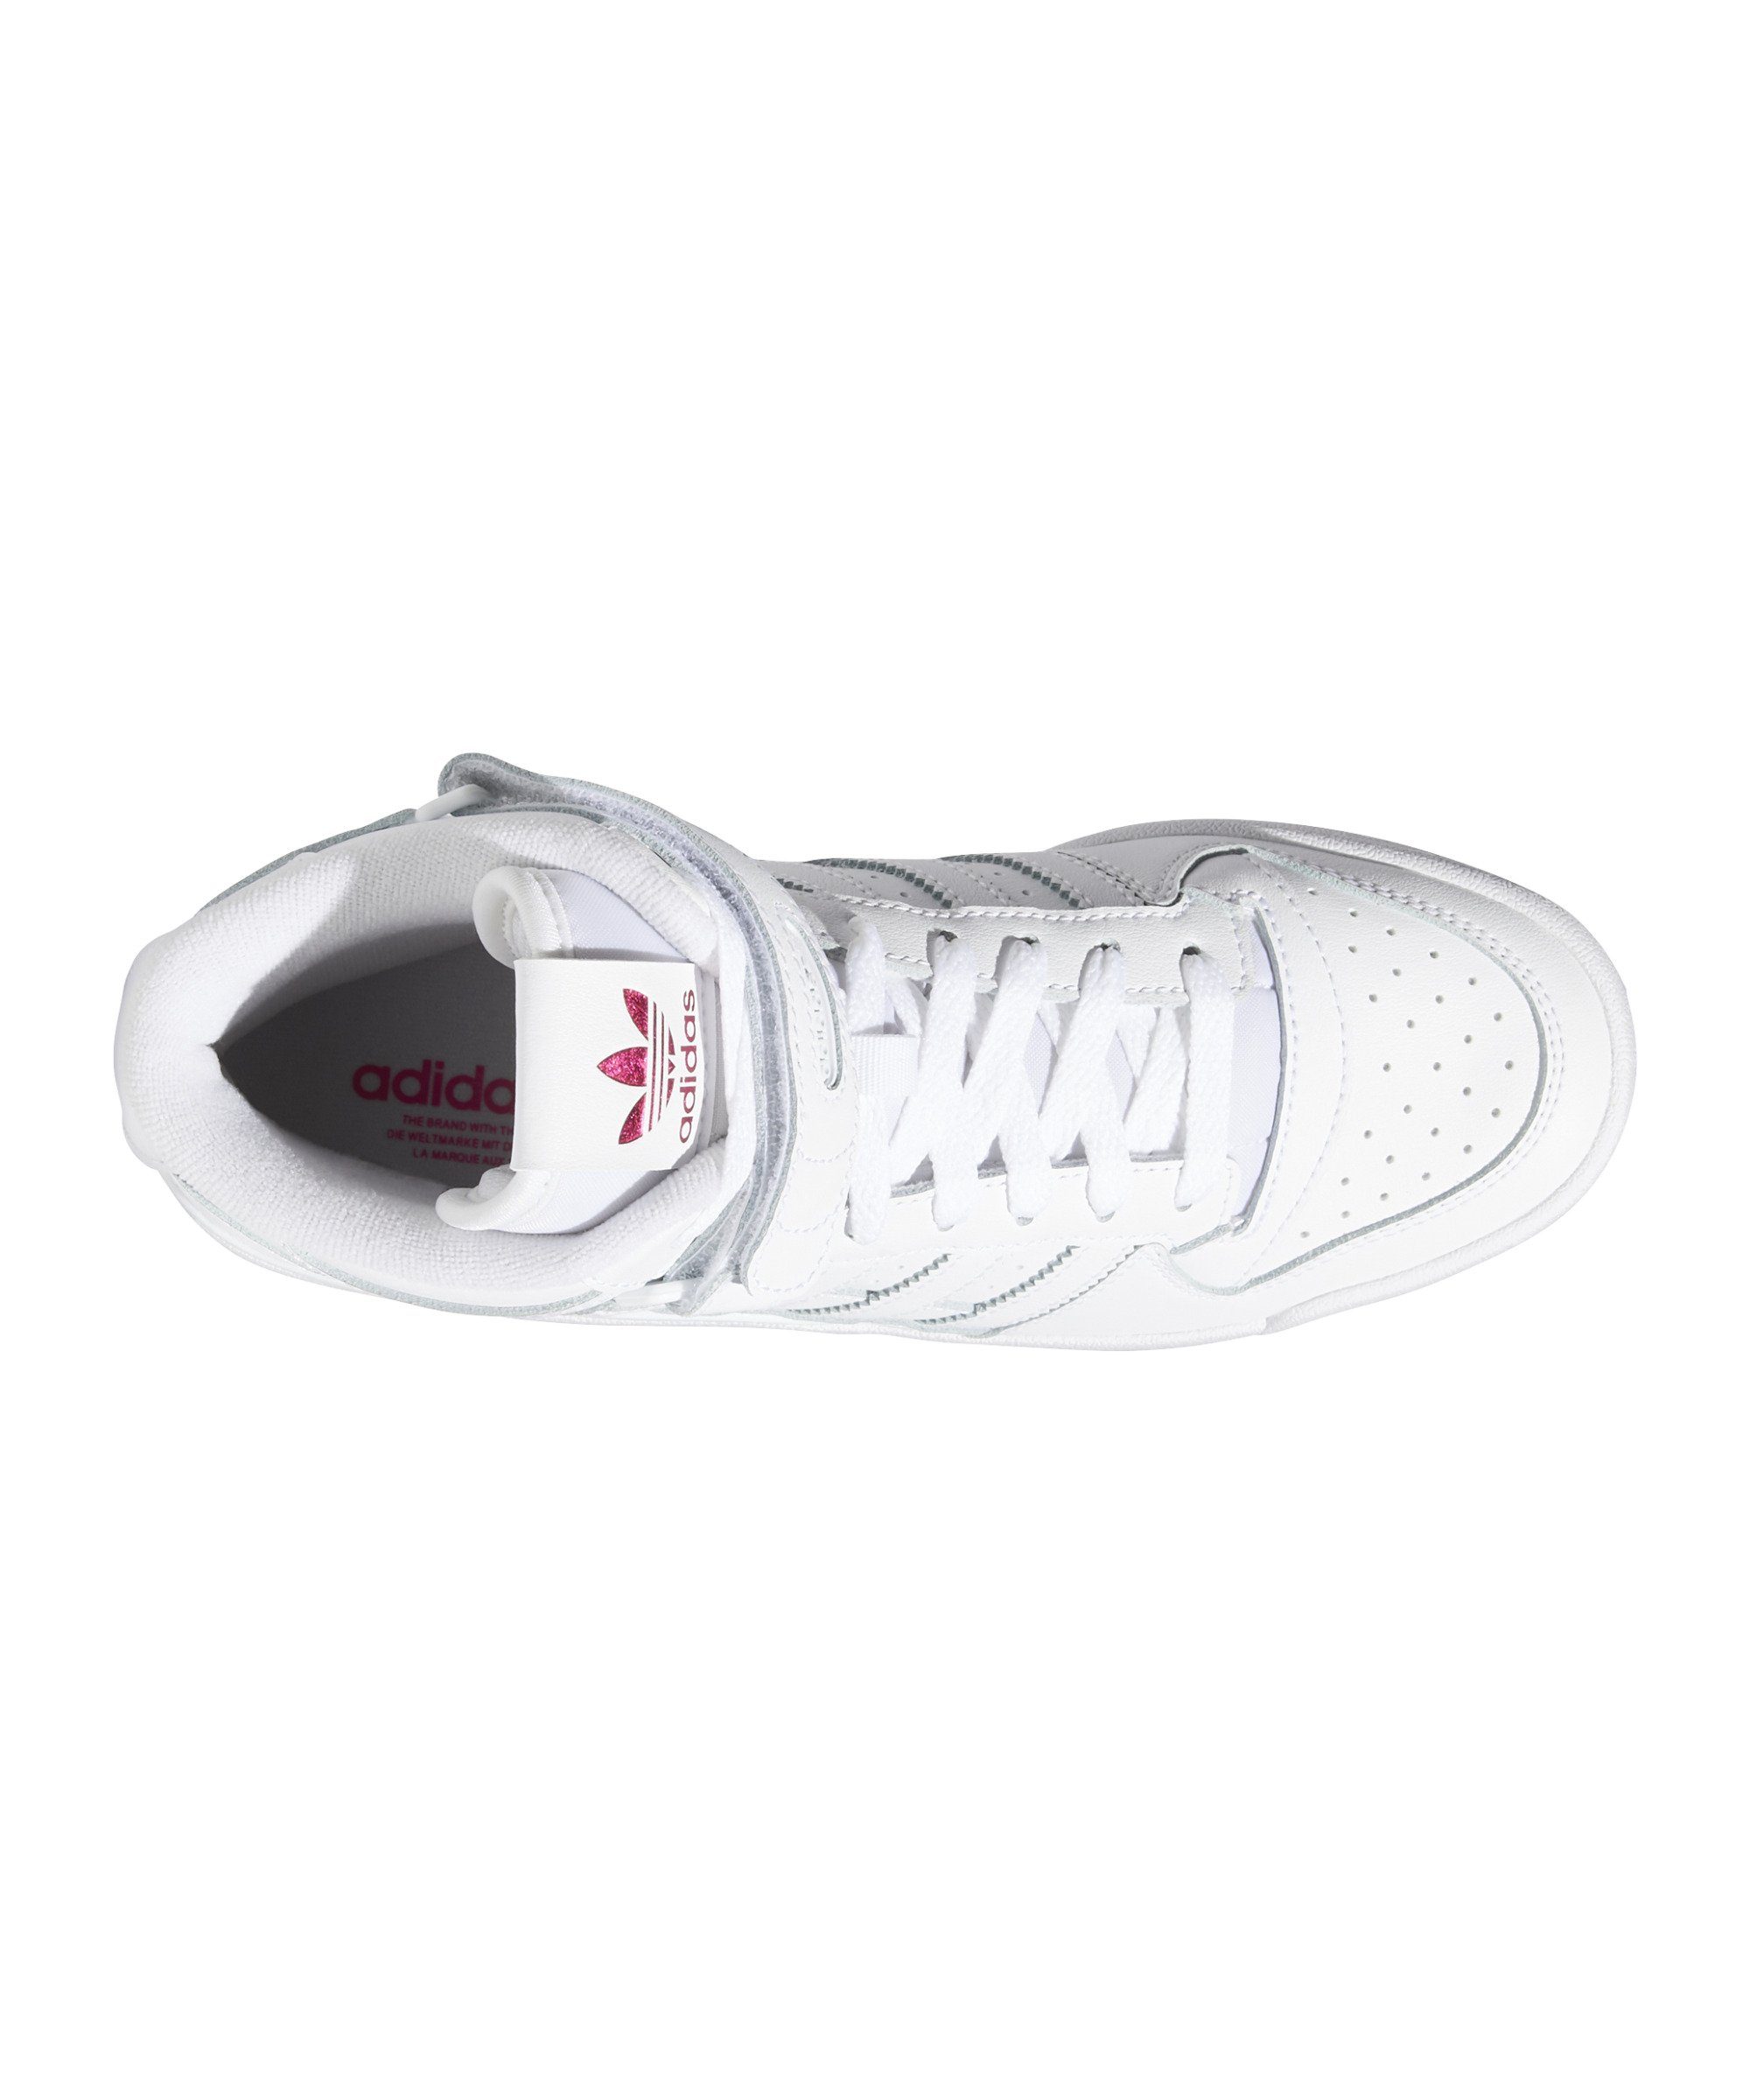 adidas Originals Forum Mid Damen weisspink Sneaker